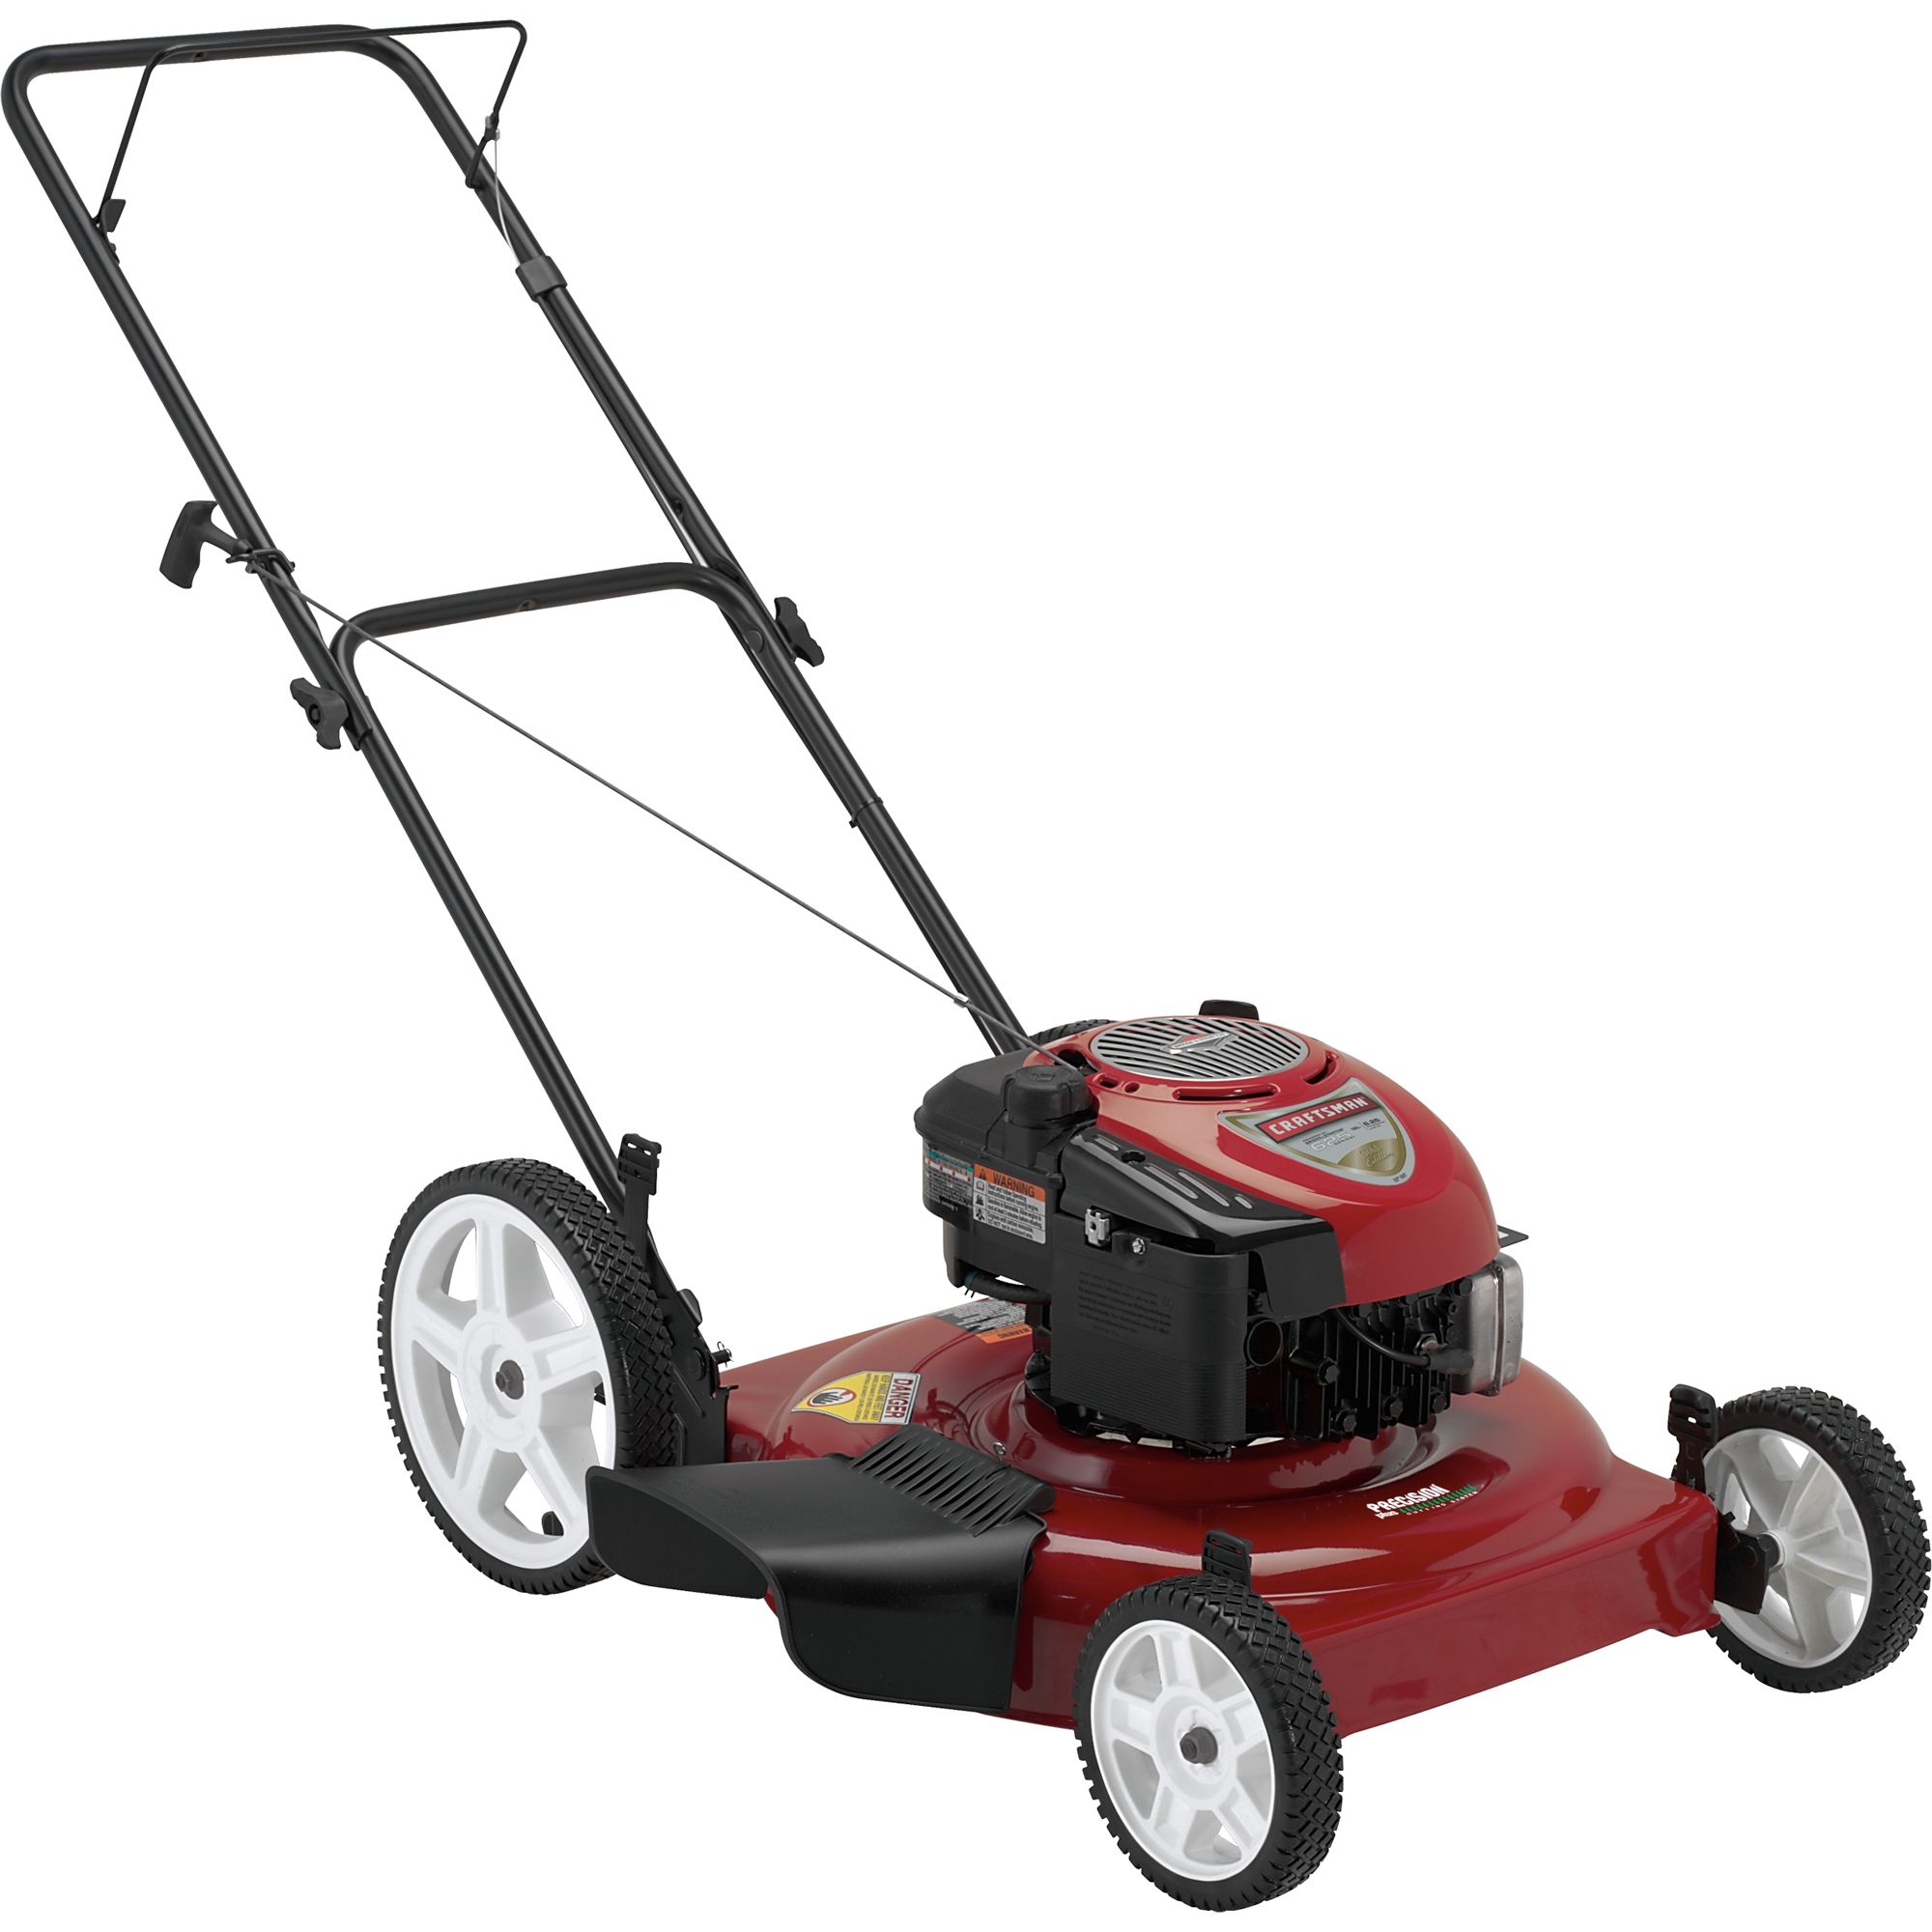 Craftsman 38527 190cc 22" Side Discharge Rear High Wheels Push Lawn Mower